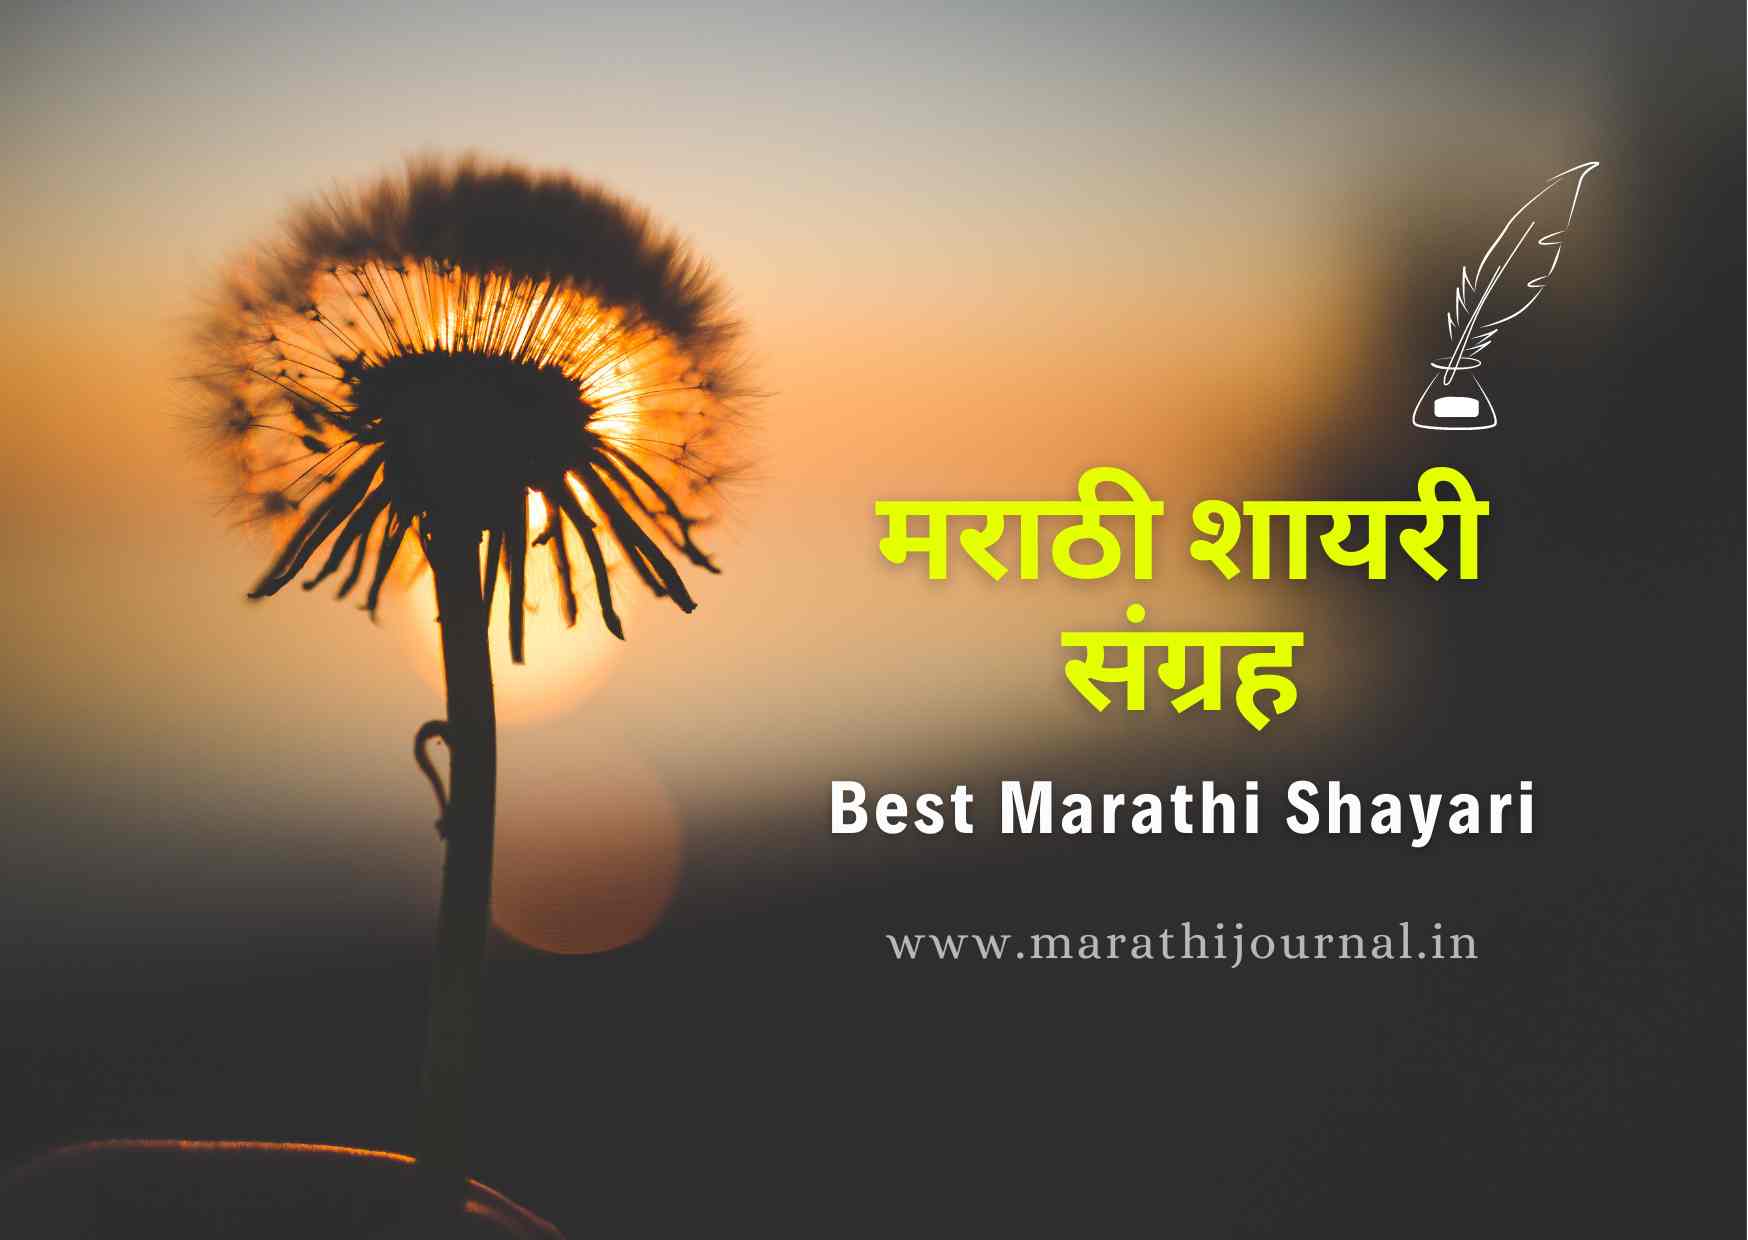 Best Marathi Shayari | मराठी शायरी संग्रह | Marathi Status